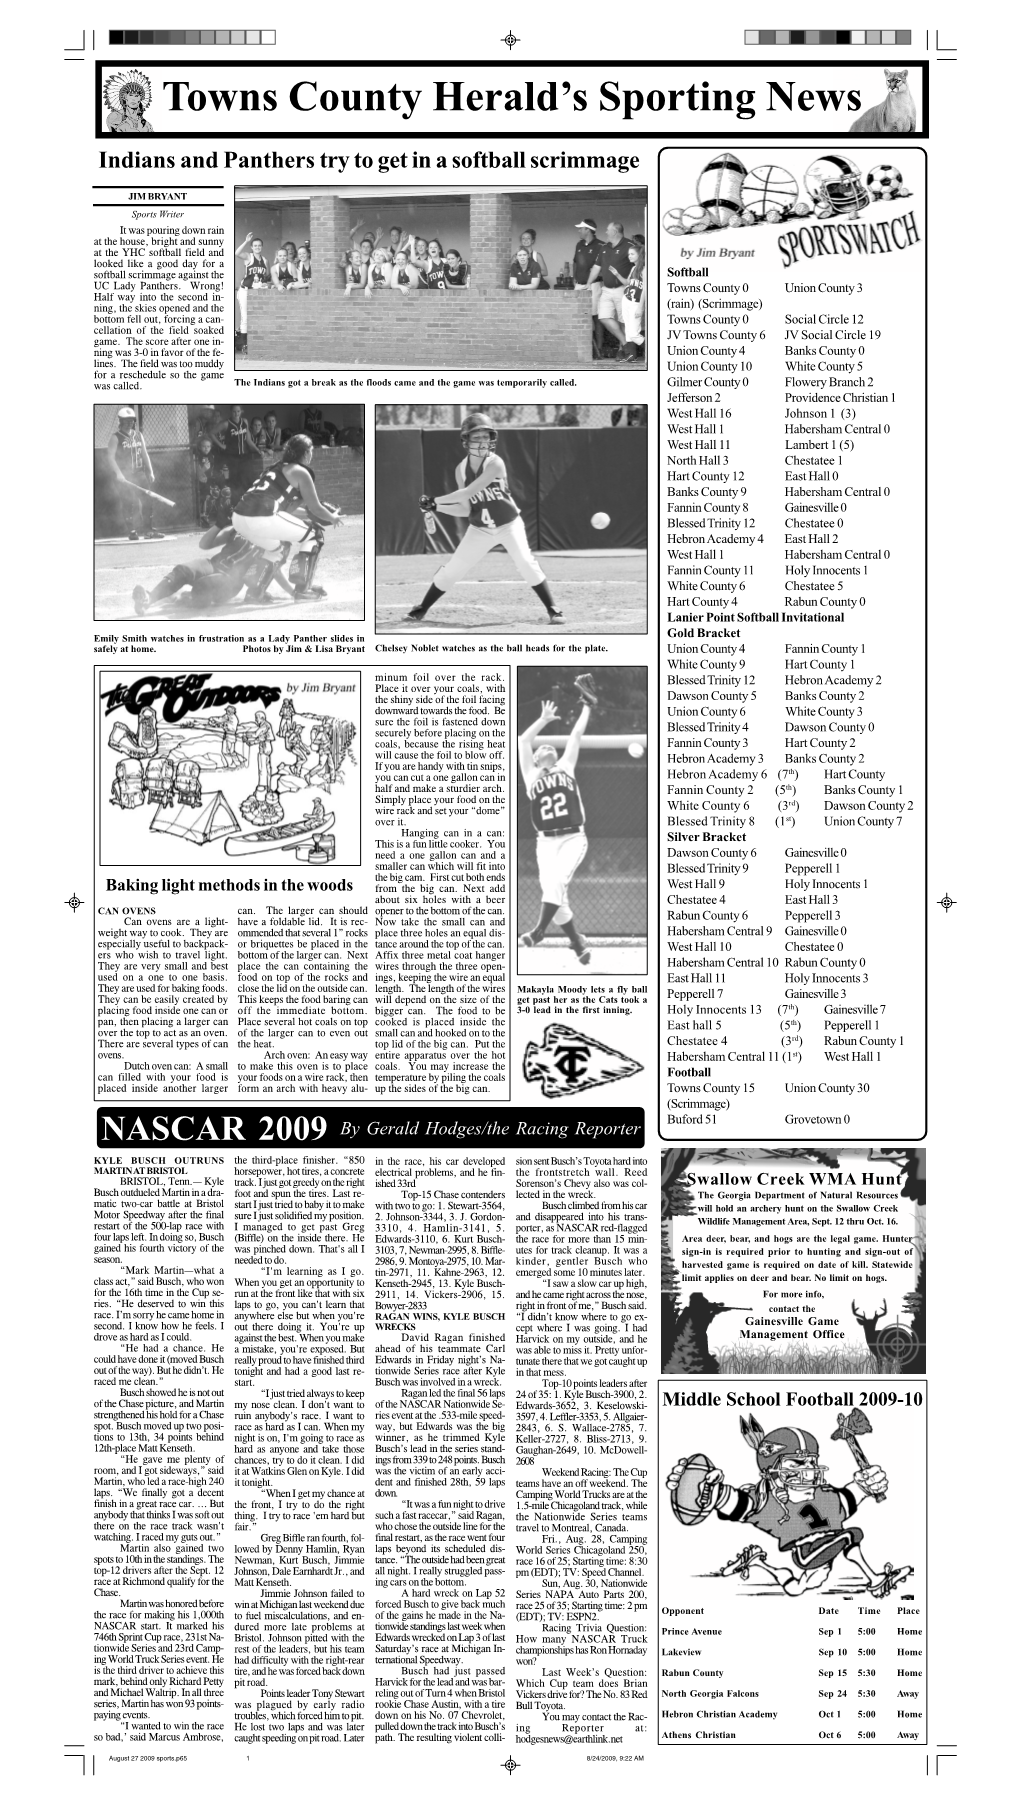 August 27 2009 Sports.P65 1 8/24/2009, 9:22 AM